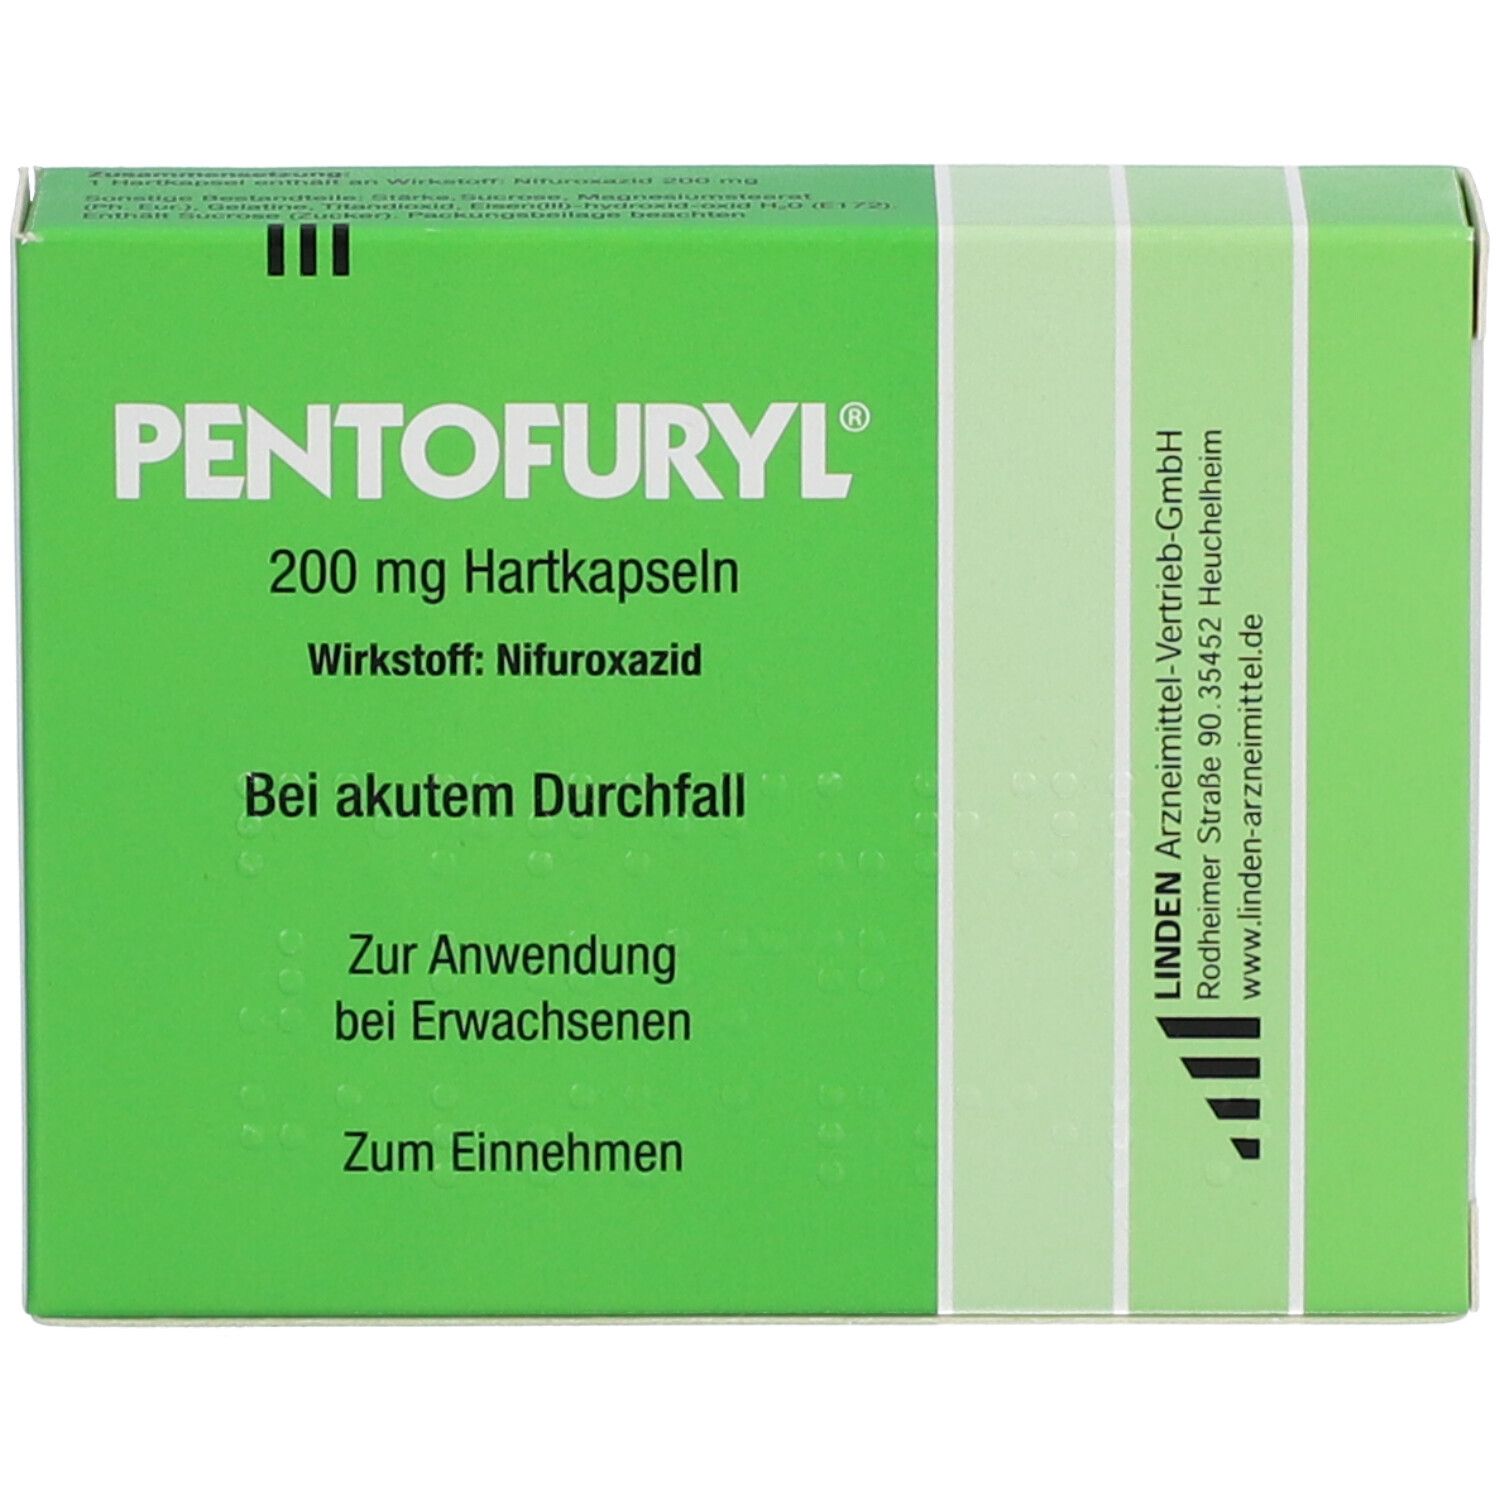 PENTOFURYL® 200 mg Hartkapseln